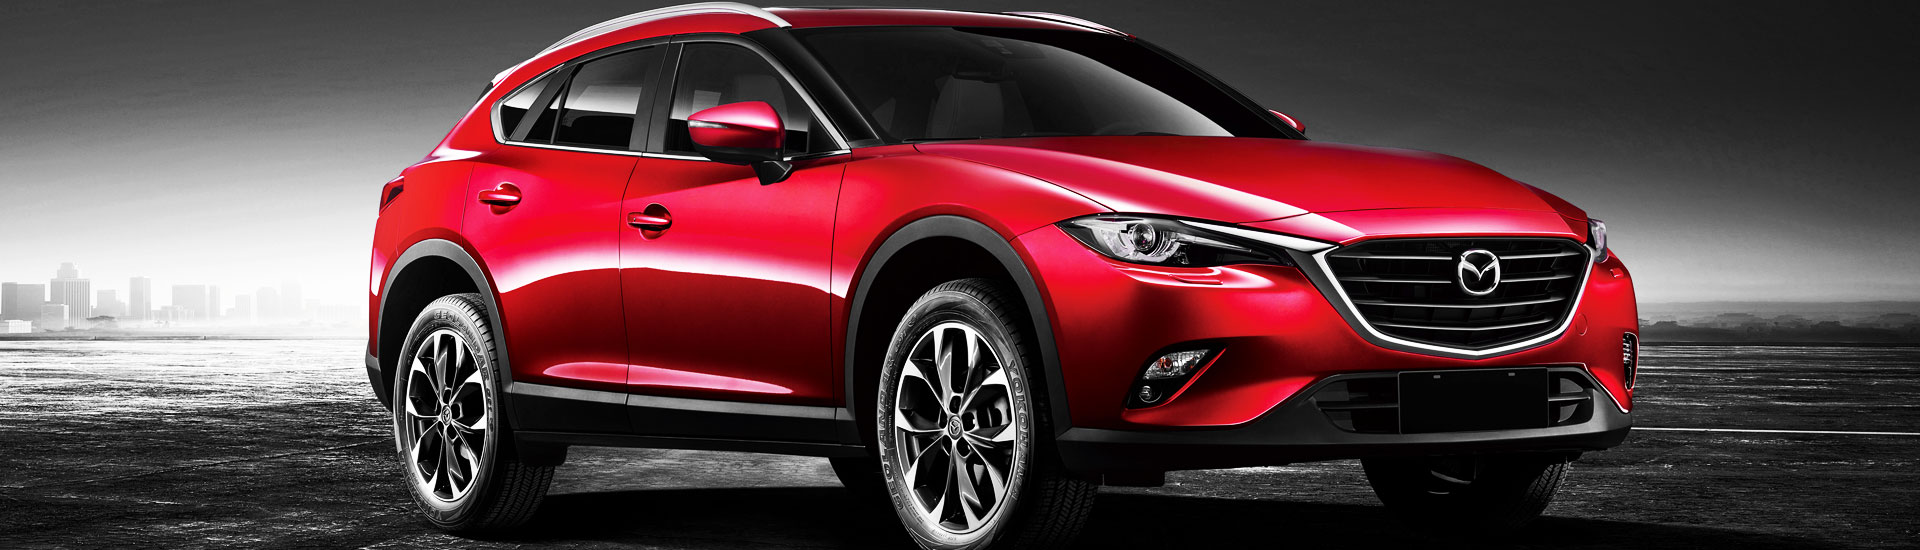 2015 Mazda Mazda3 Window Tint